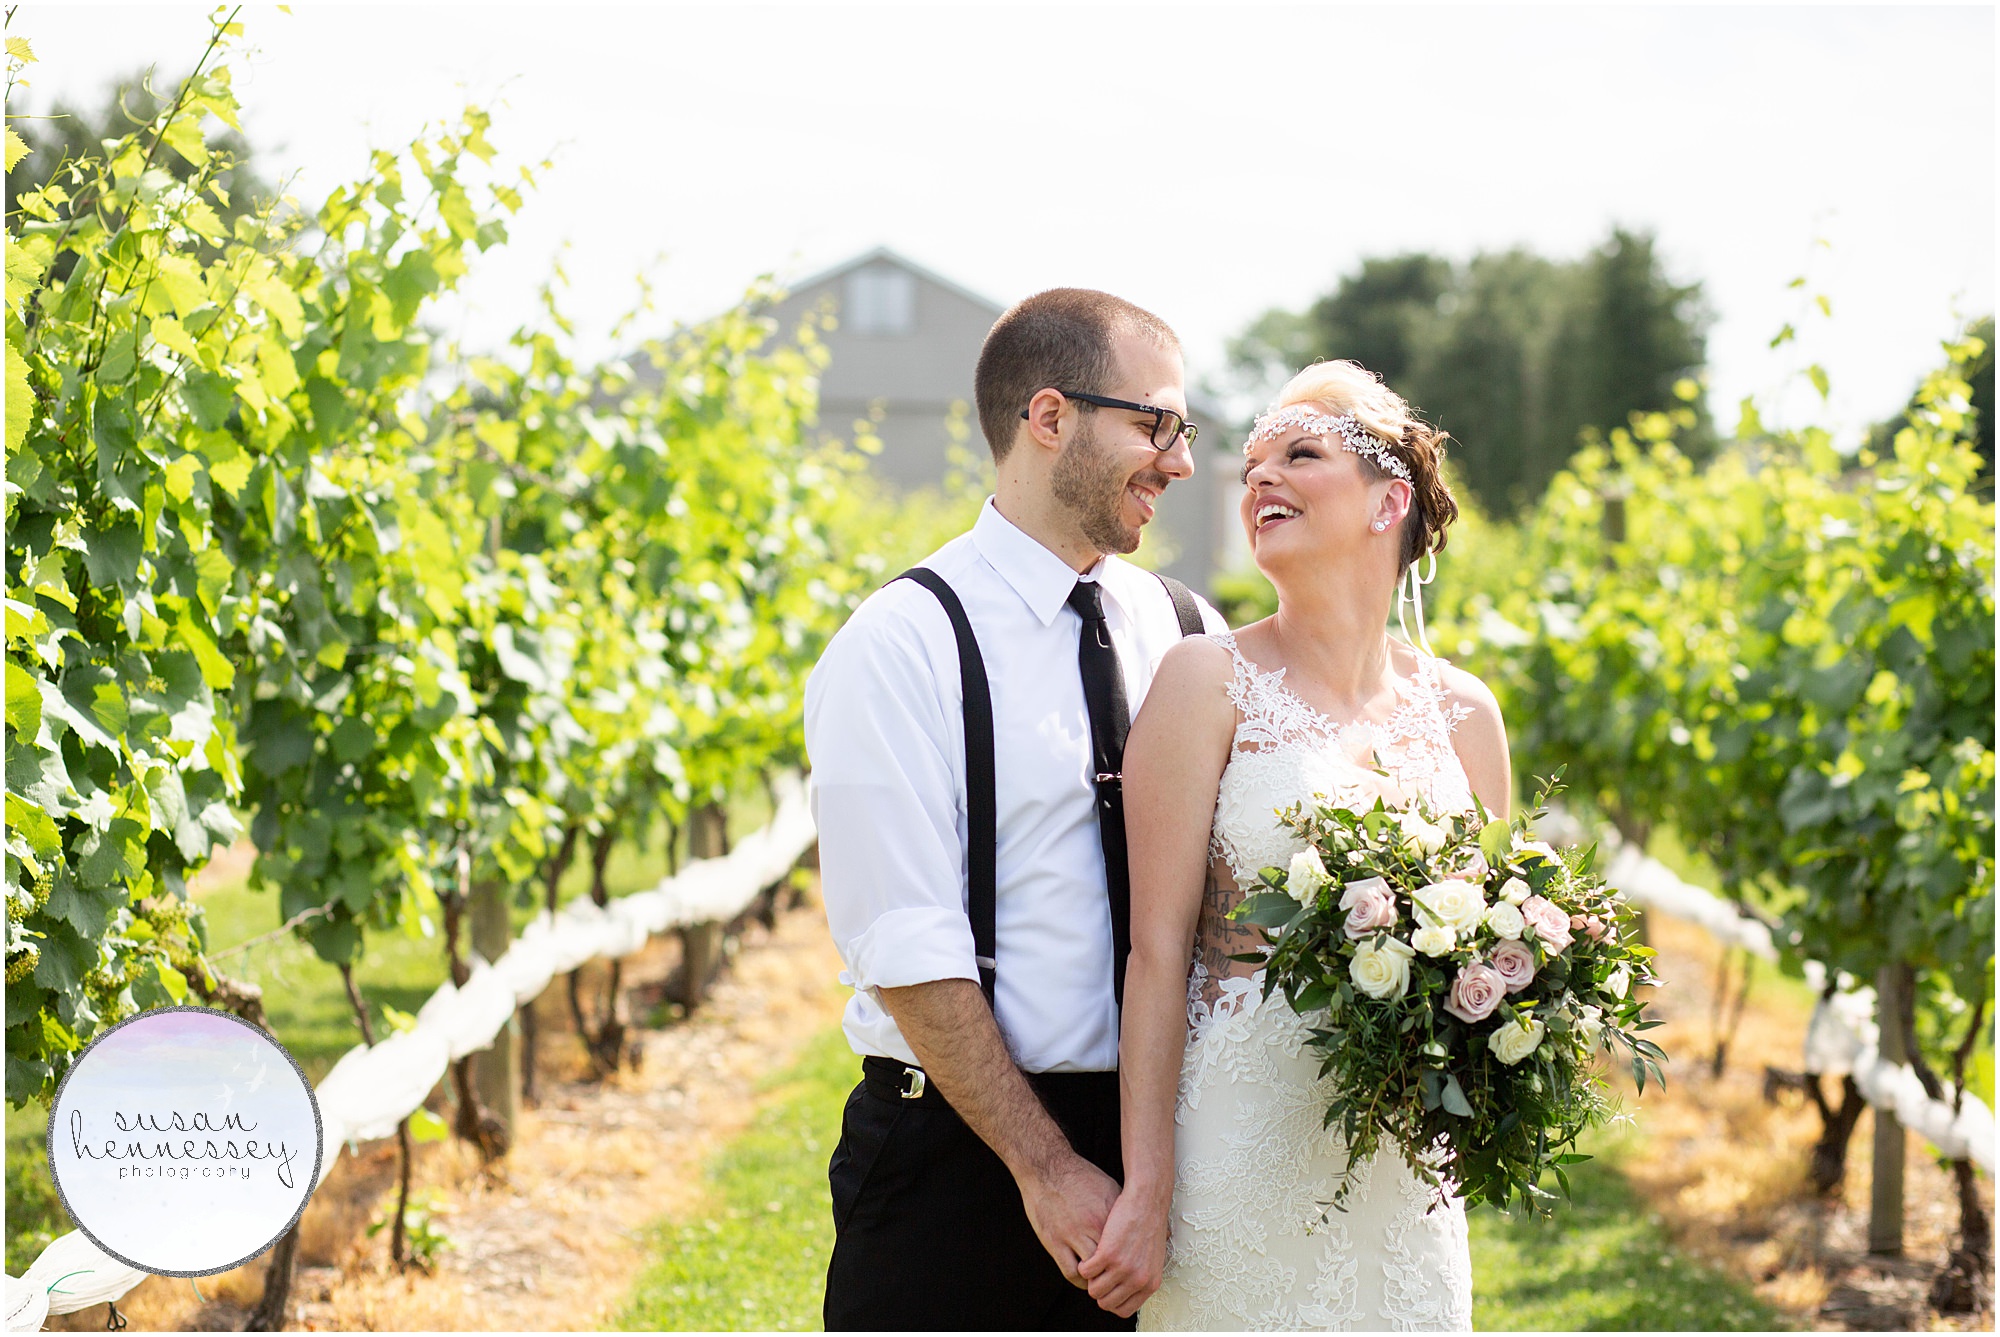 A vineyard wedding in South Jersey